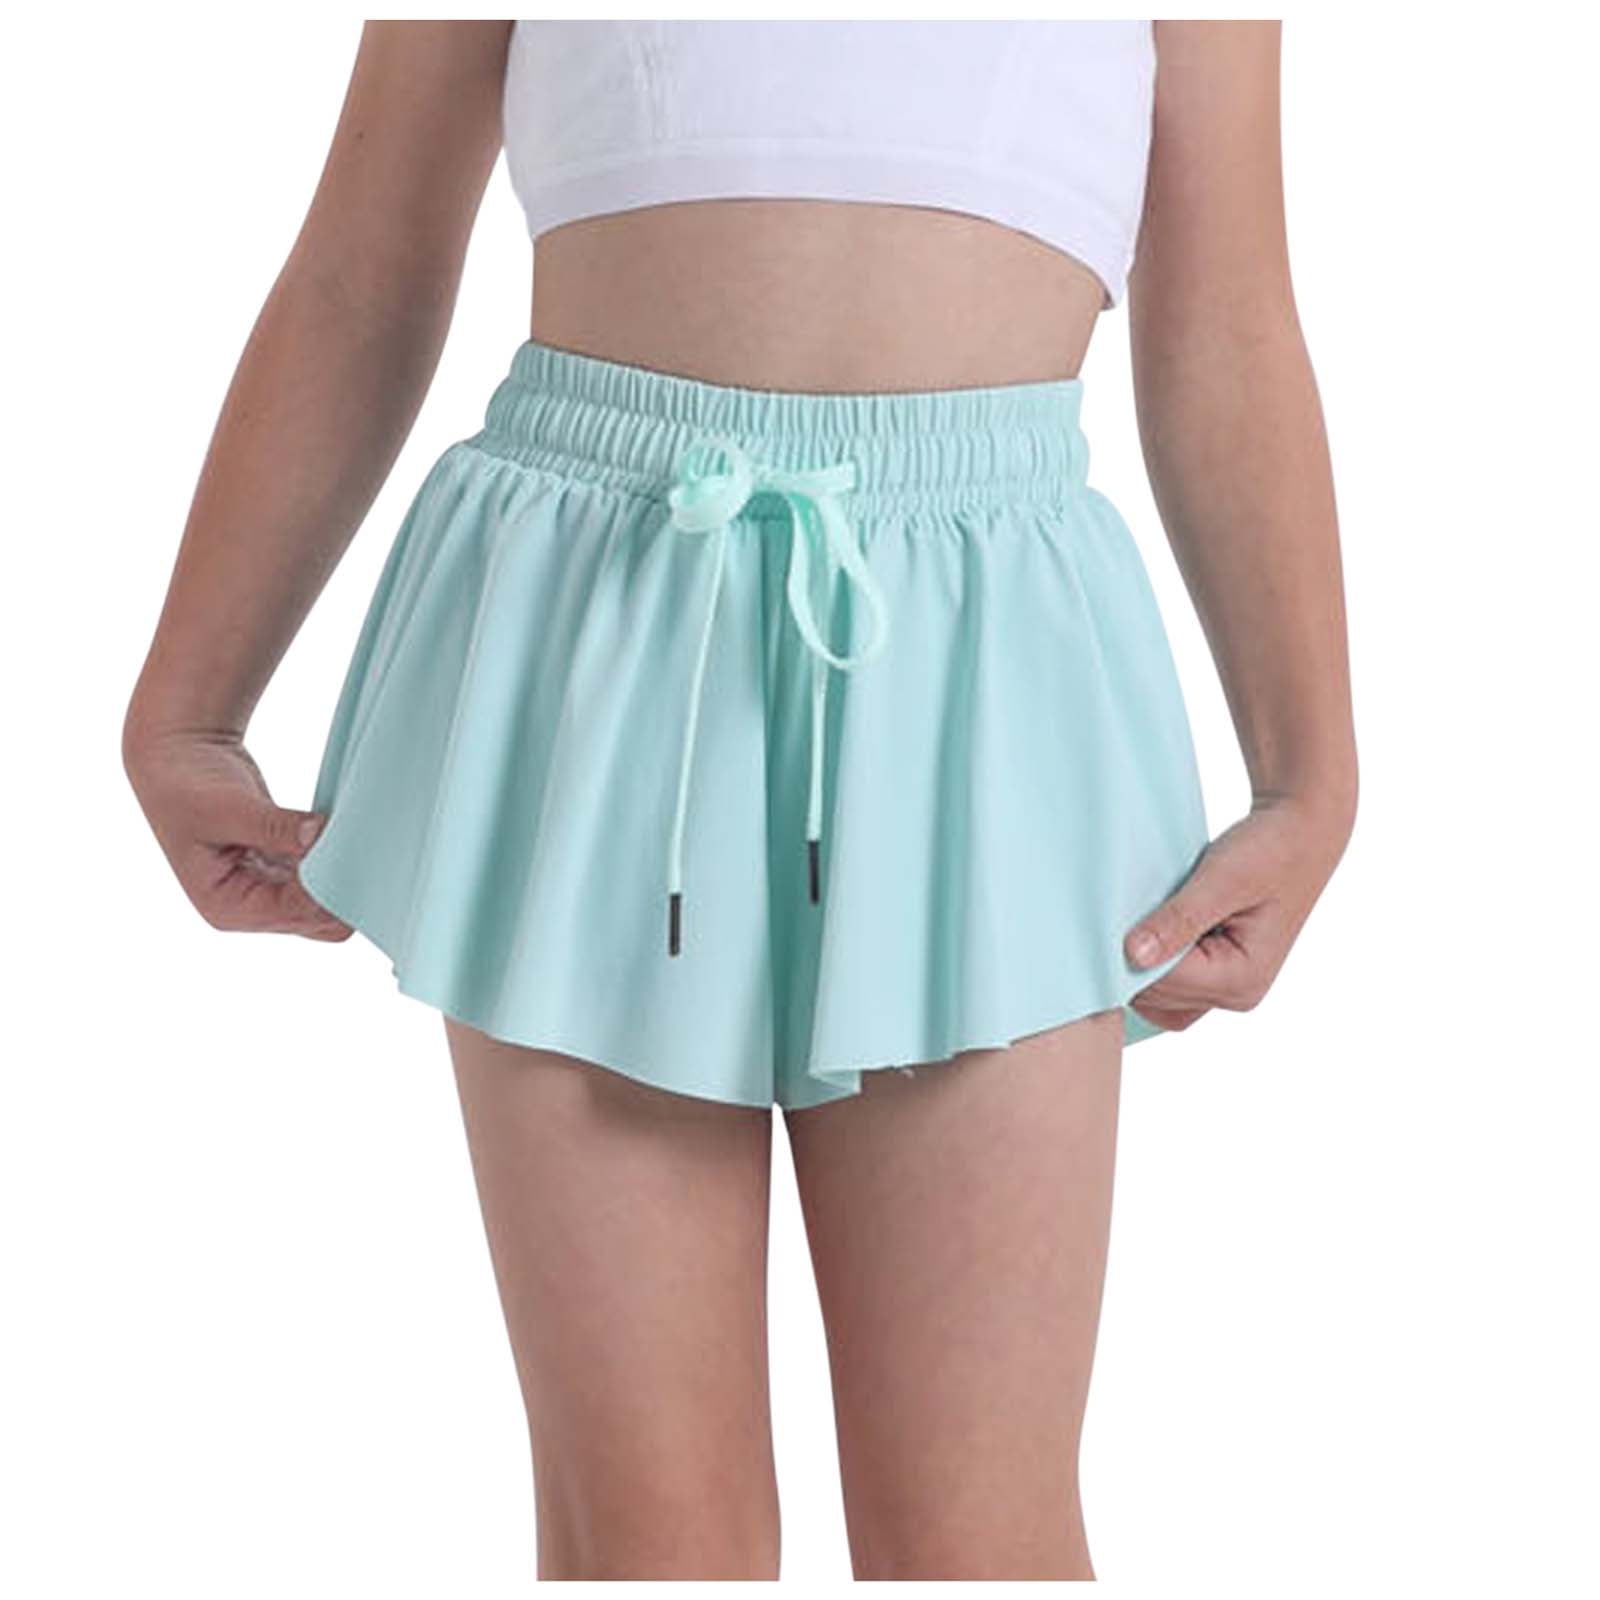 Reduce!Herrnalise Kids Teen Girls Tennis Skirt Pleated Golf Athletic Skort  Summer Sports Shorts Gym Running Biker Tennis Short Skirt with Pocket Black